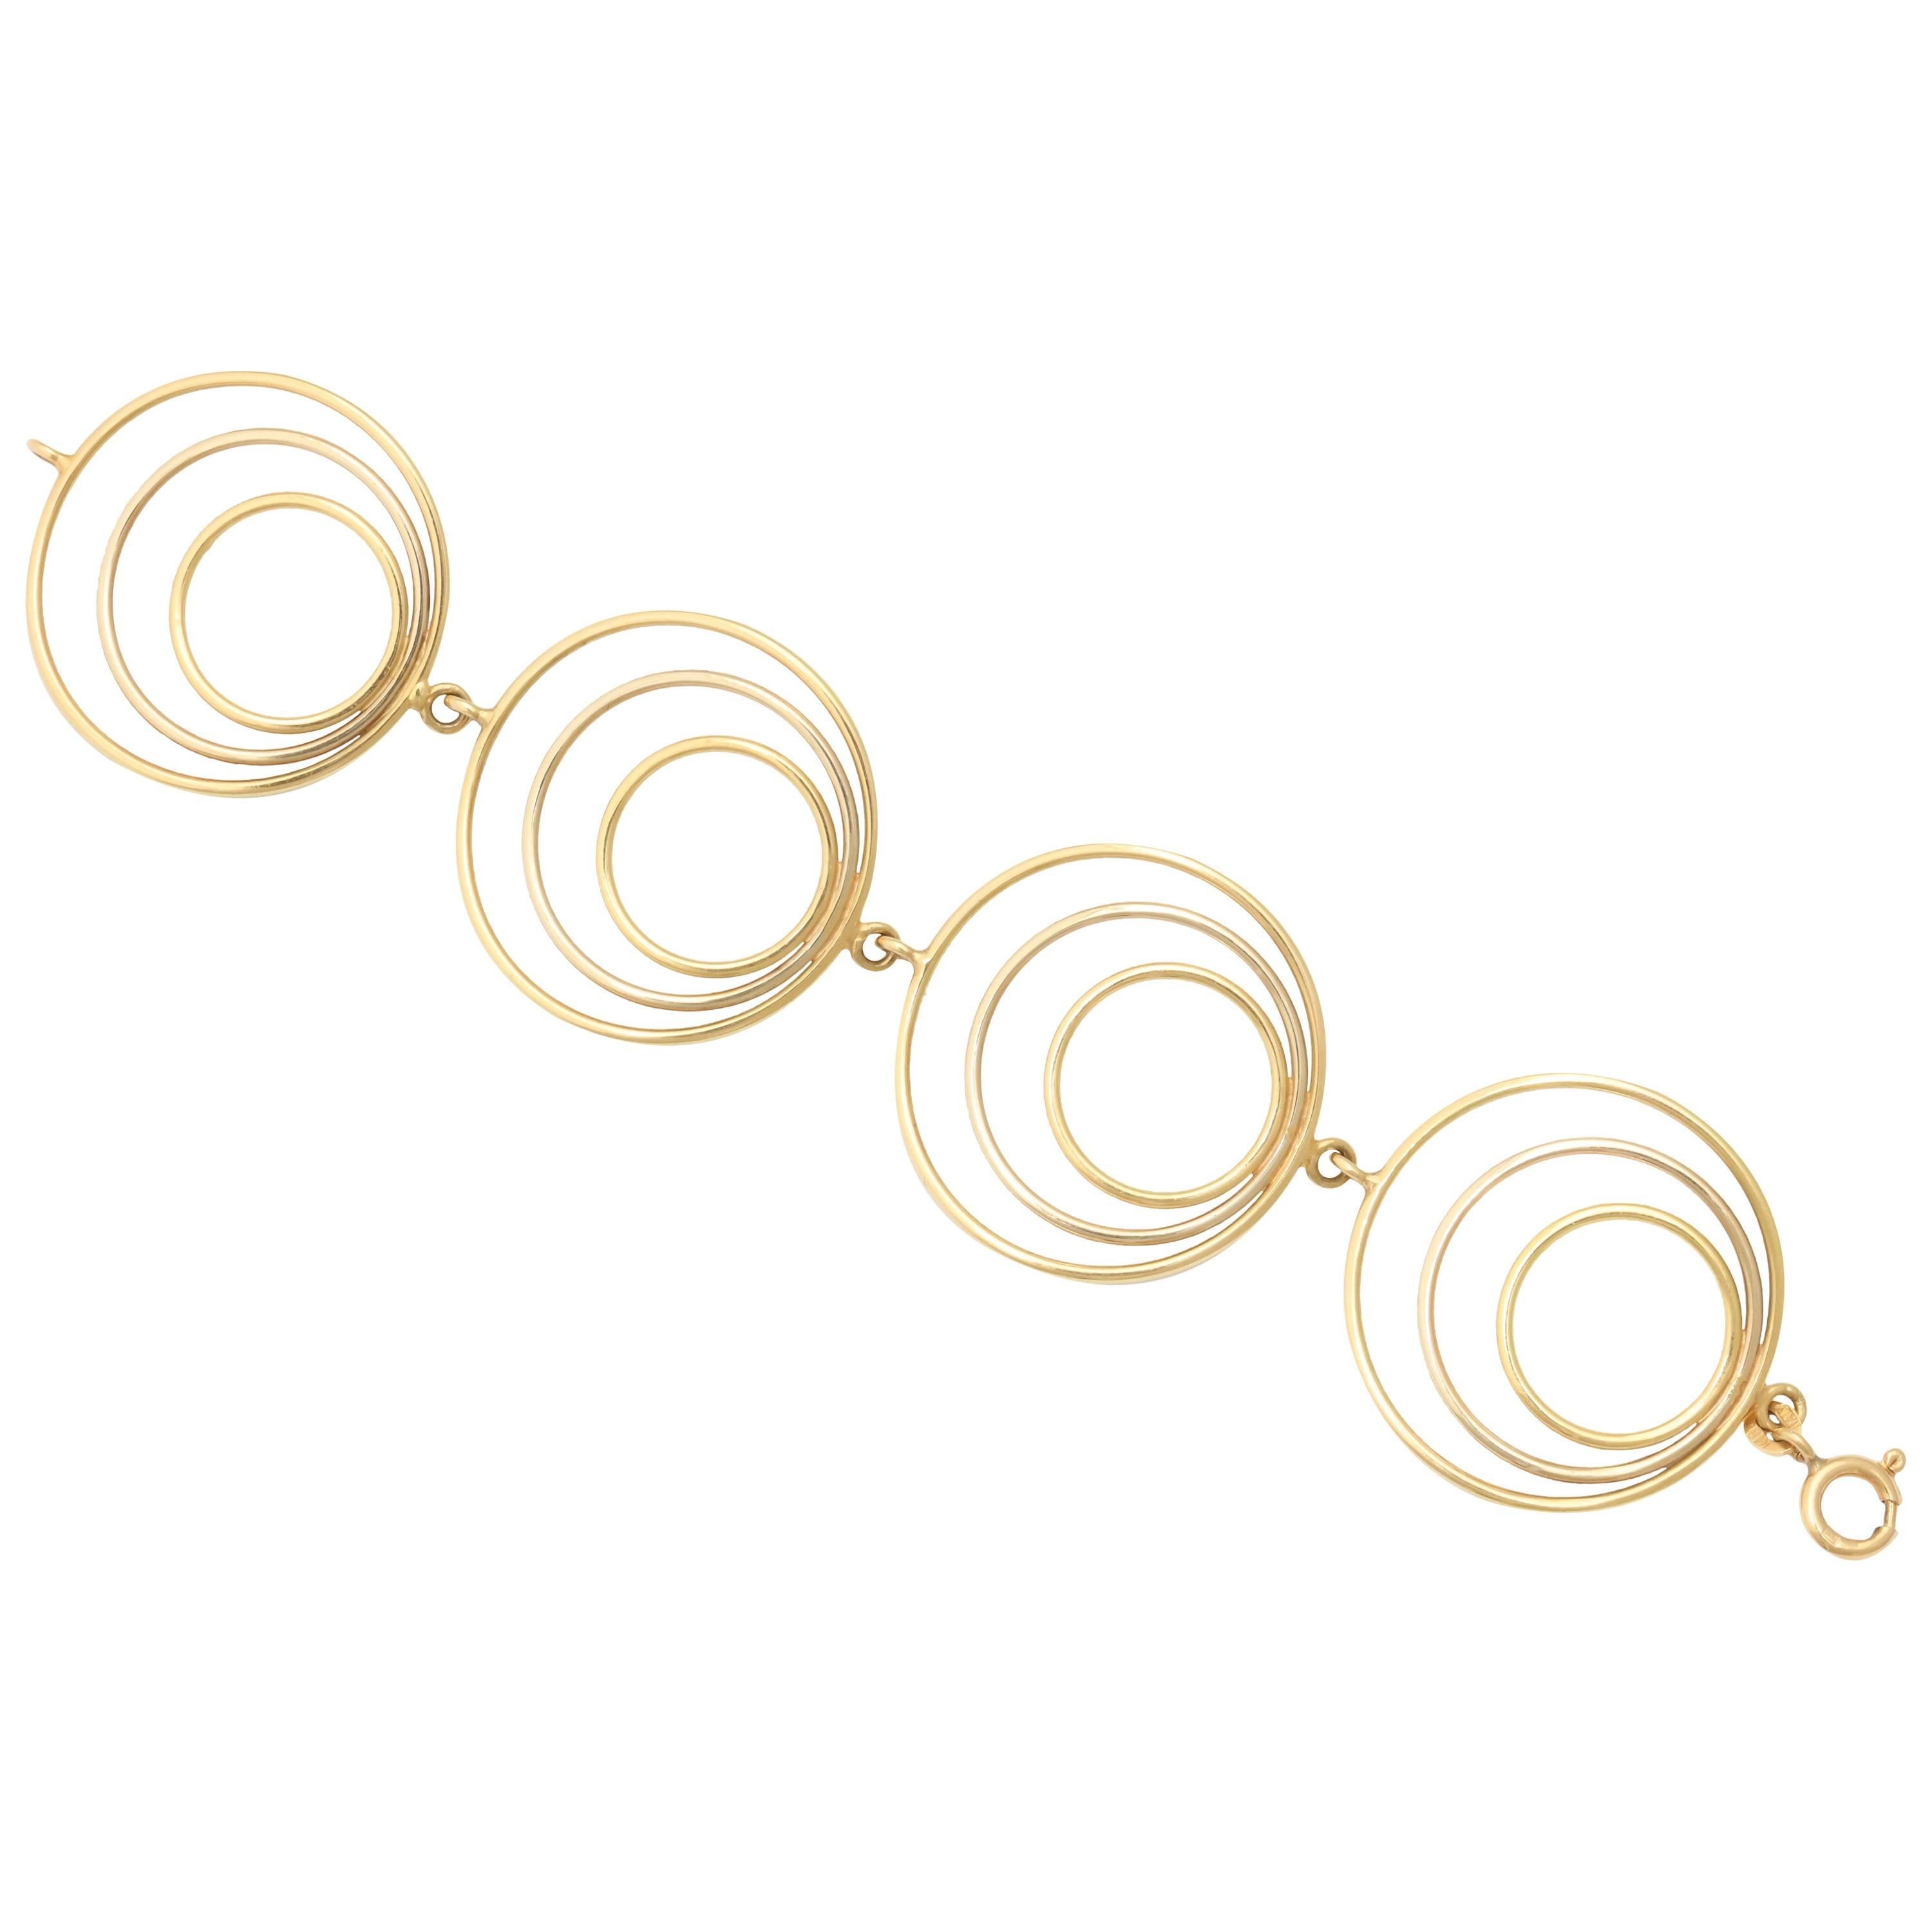 Handmade Gold Spiral Bracelet